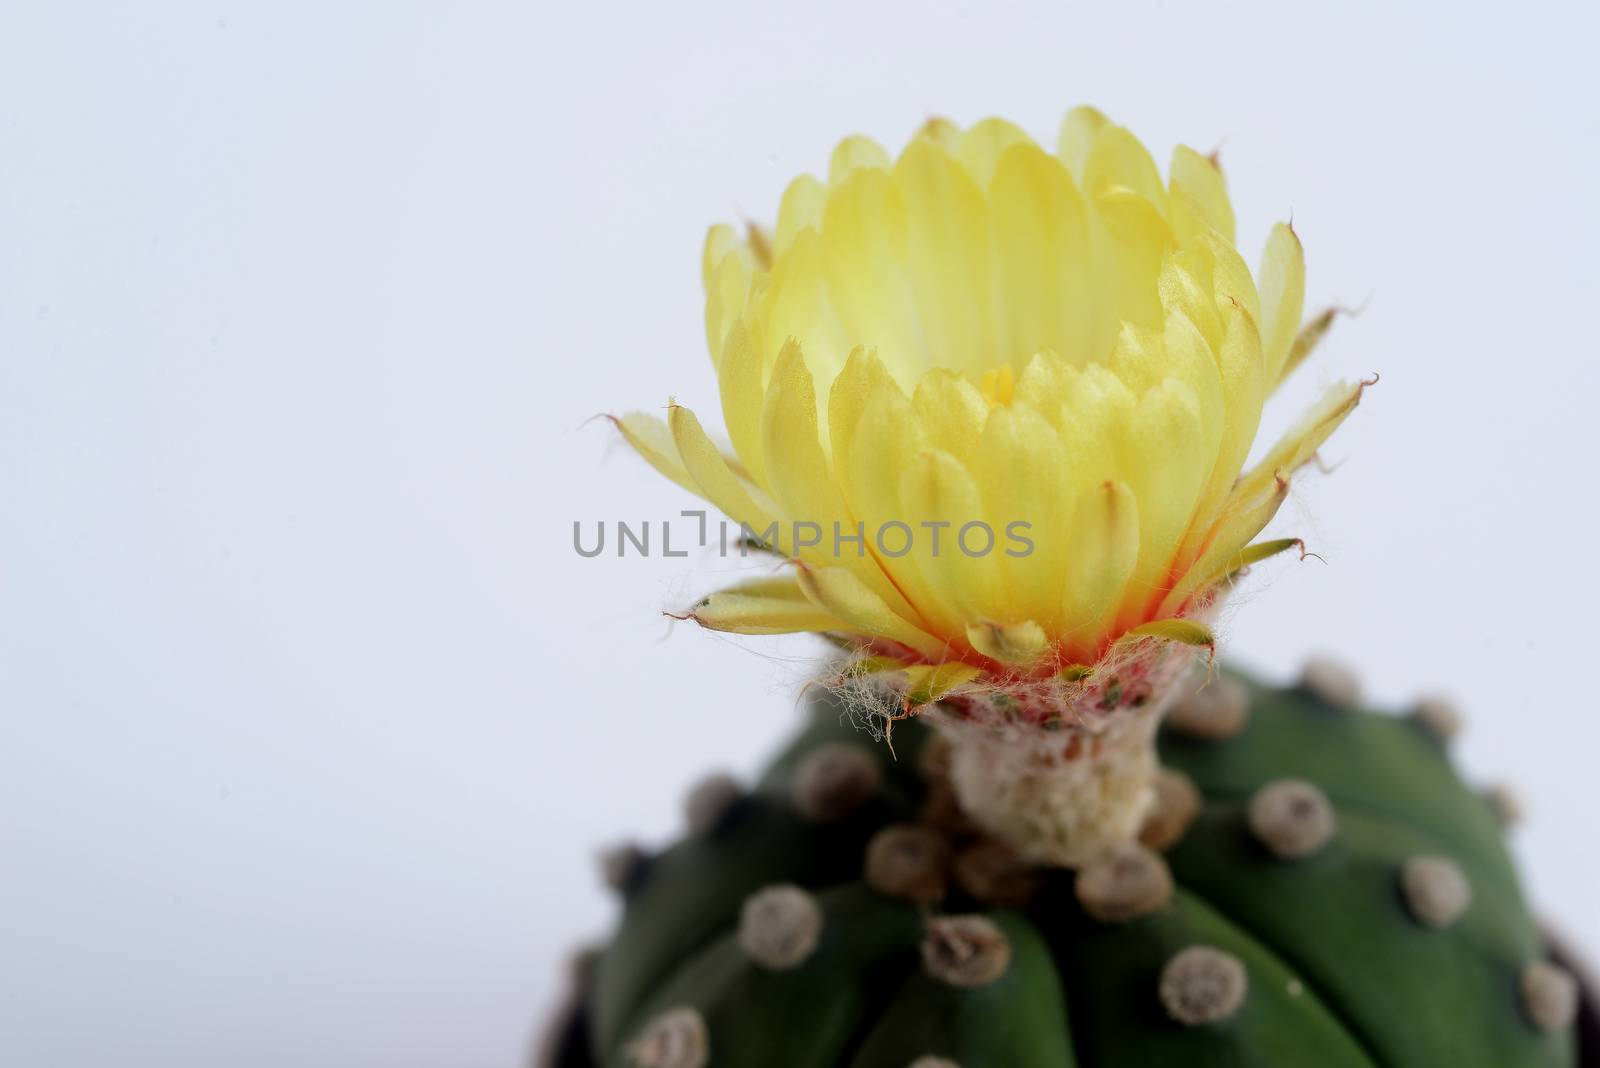 Astrophythum asterias nudum or sand dollar cactus, sea urchin cactus by ideation90